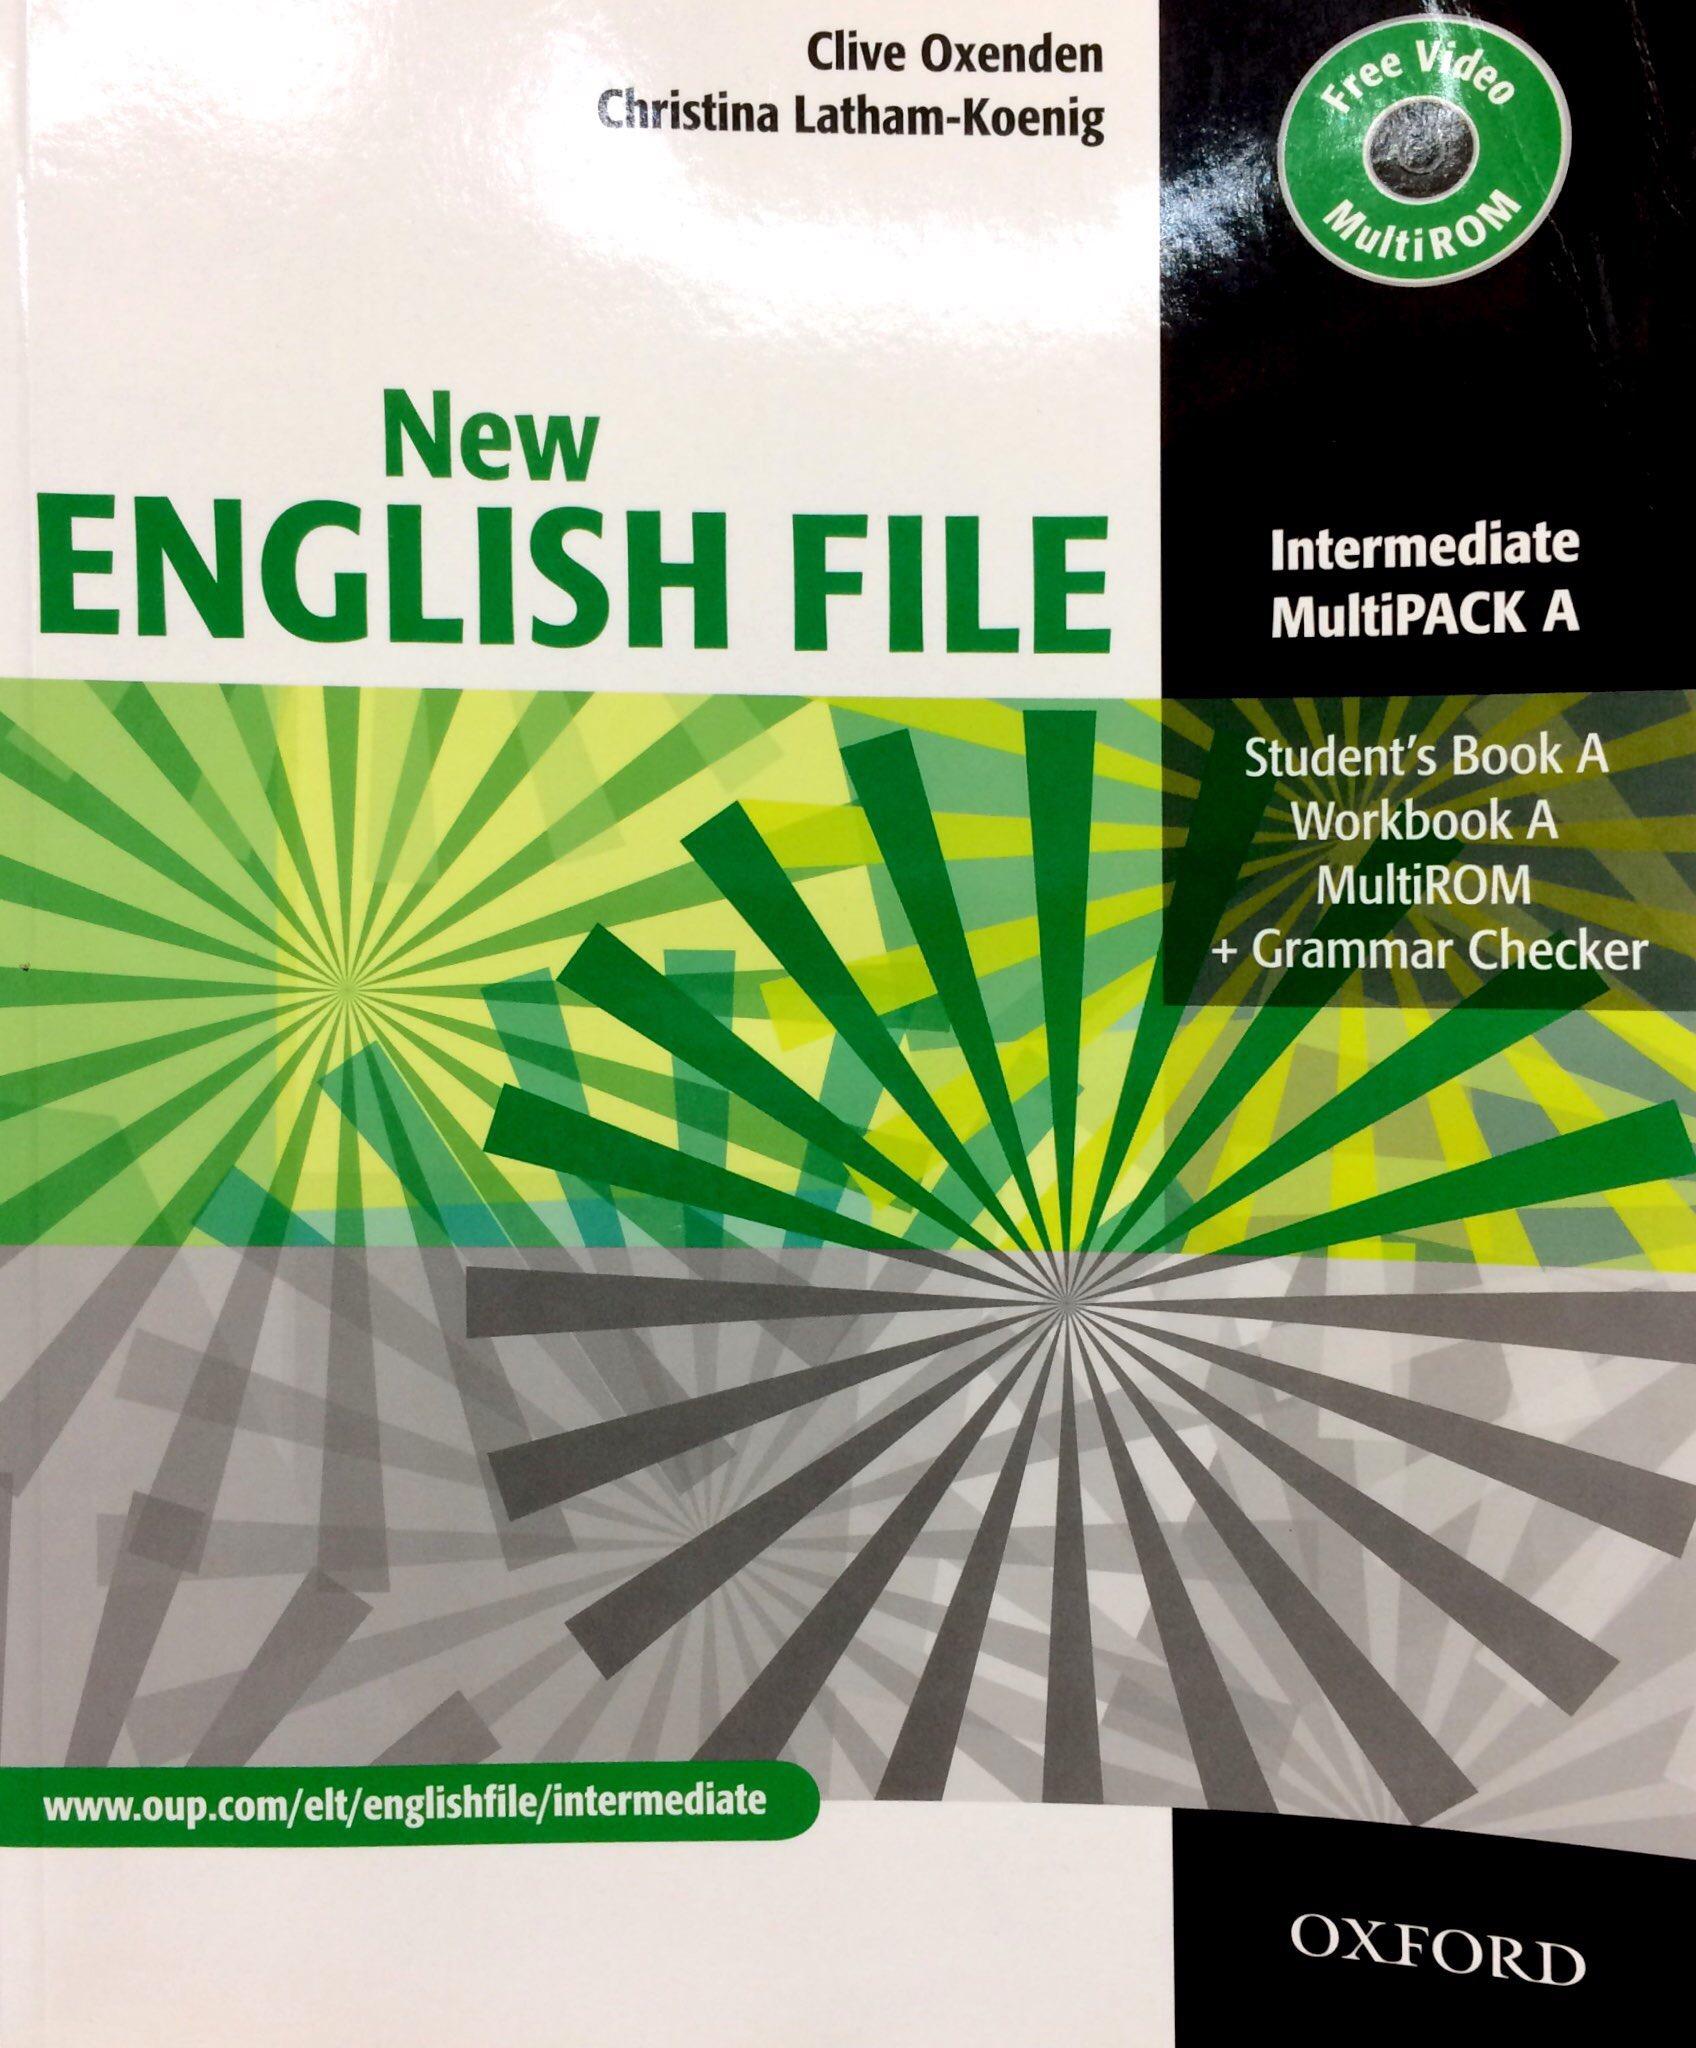 New English File Intermediate MultiPACK A